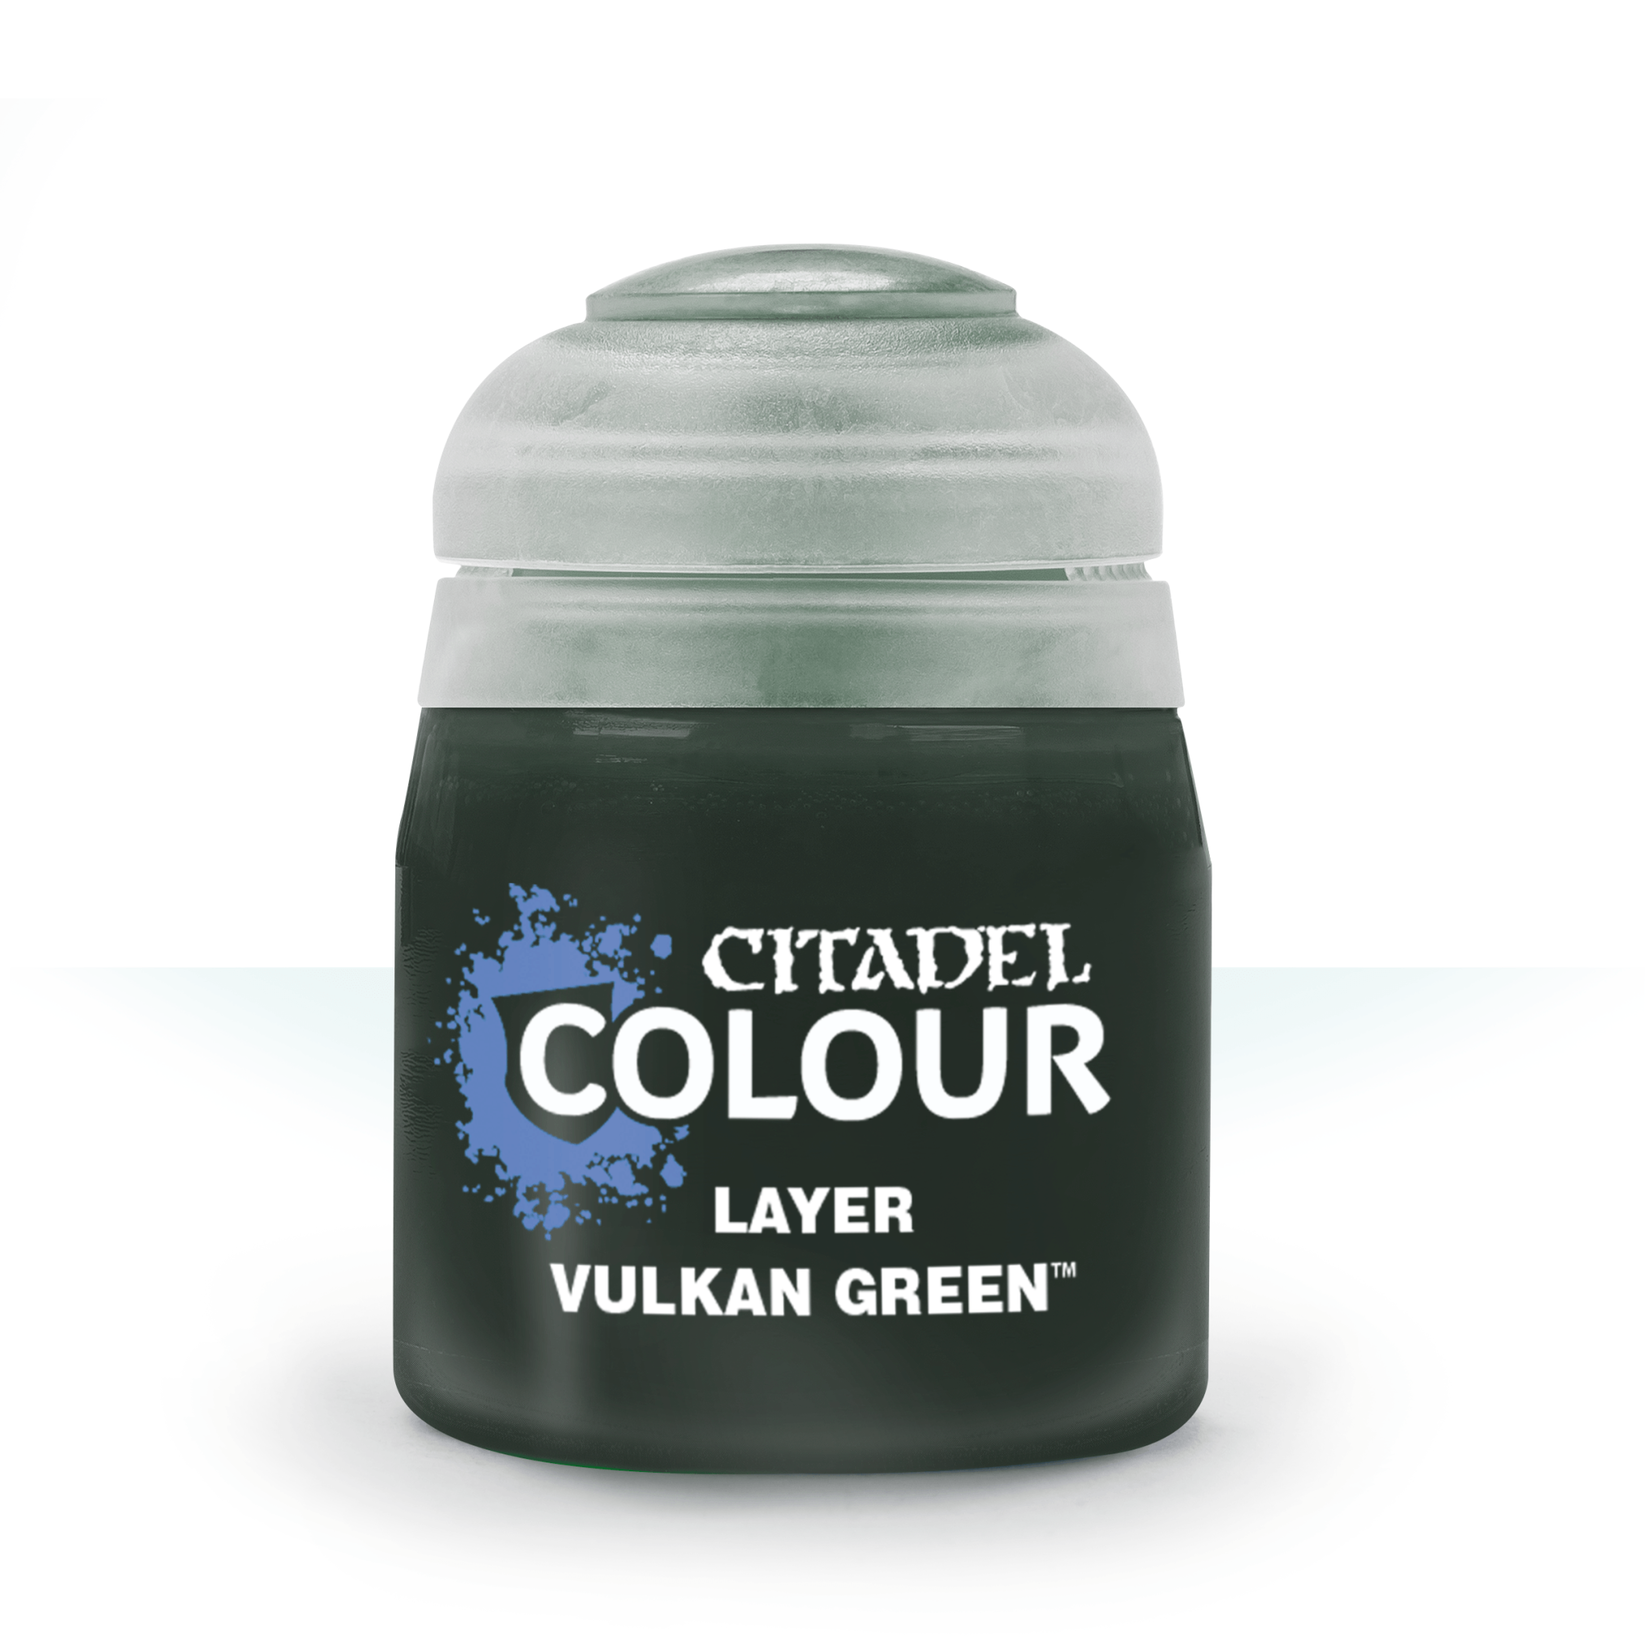 Citadel Layer Vulkan Green 12ml pot